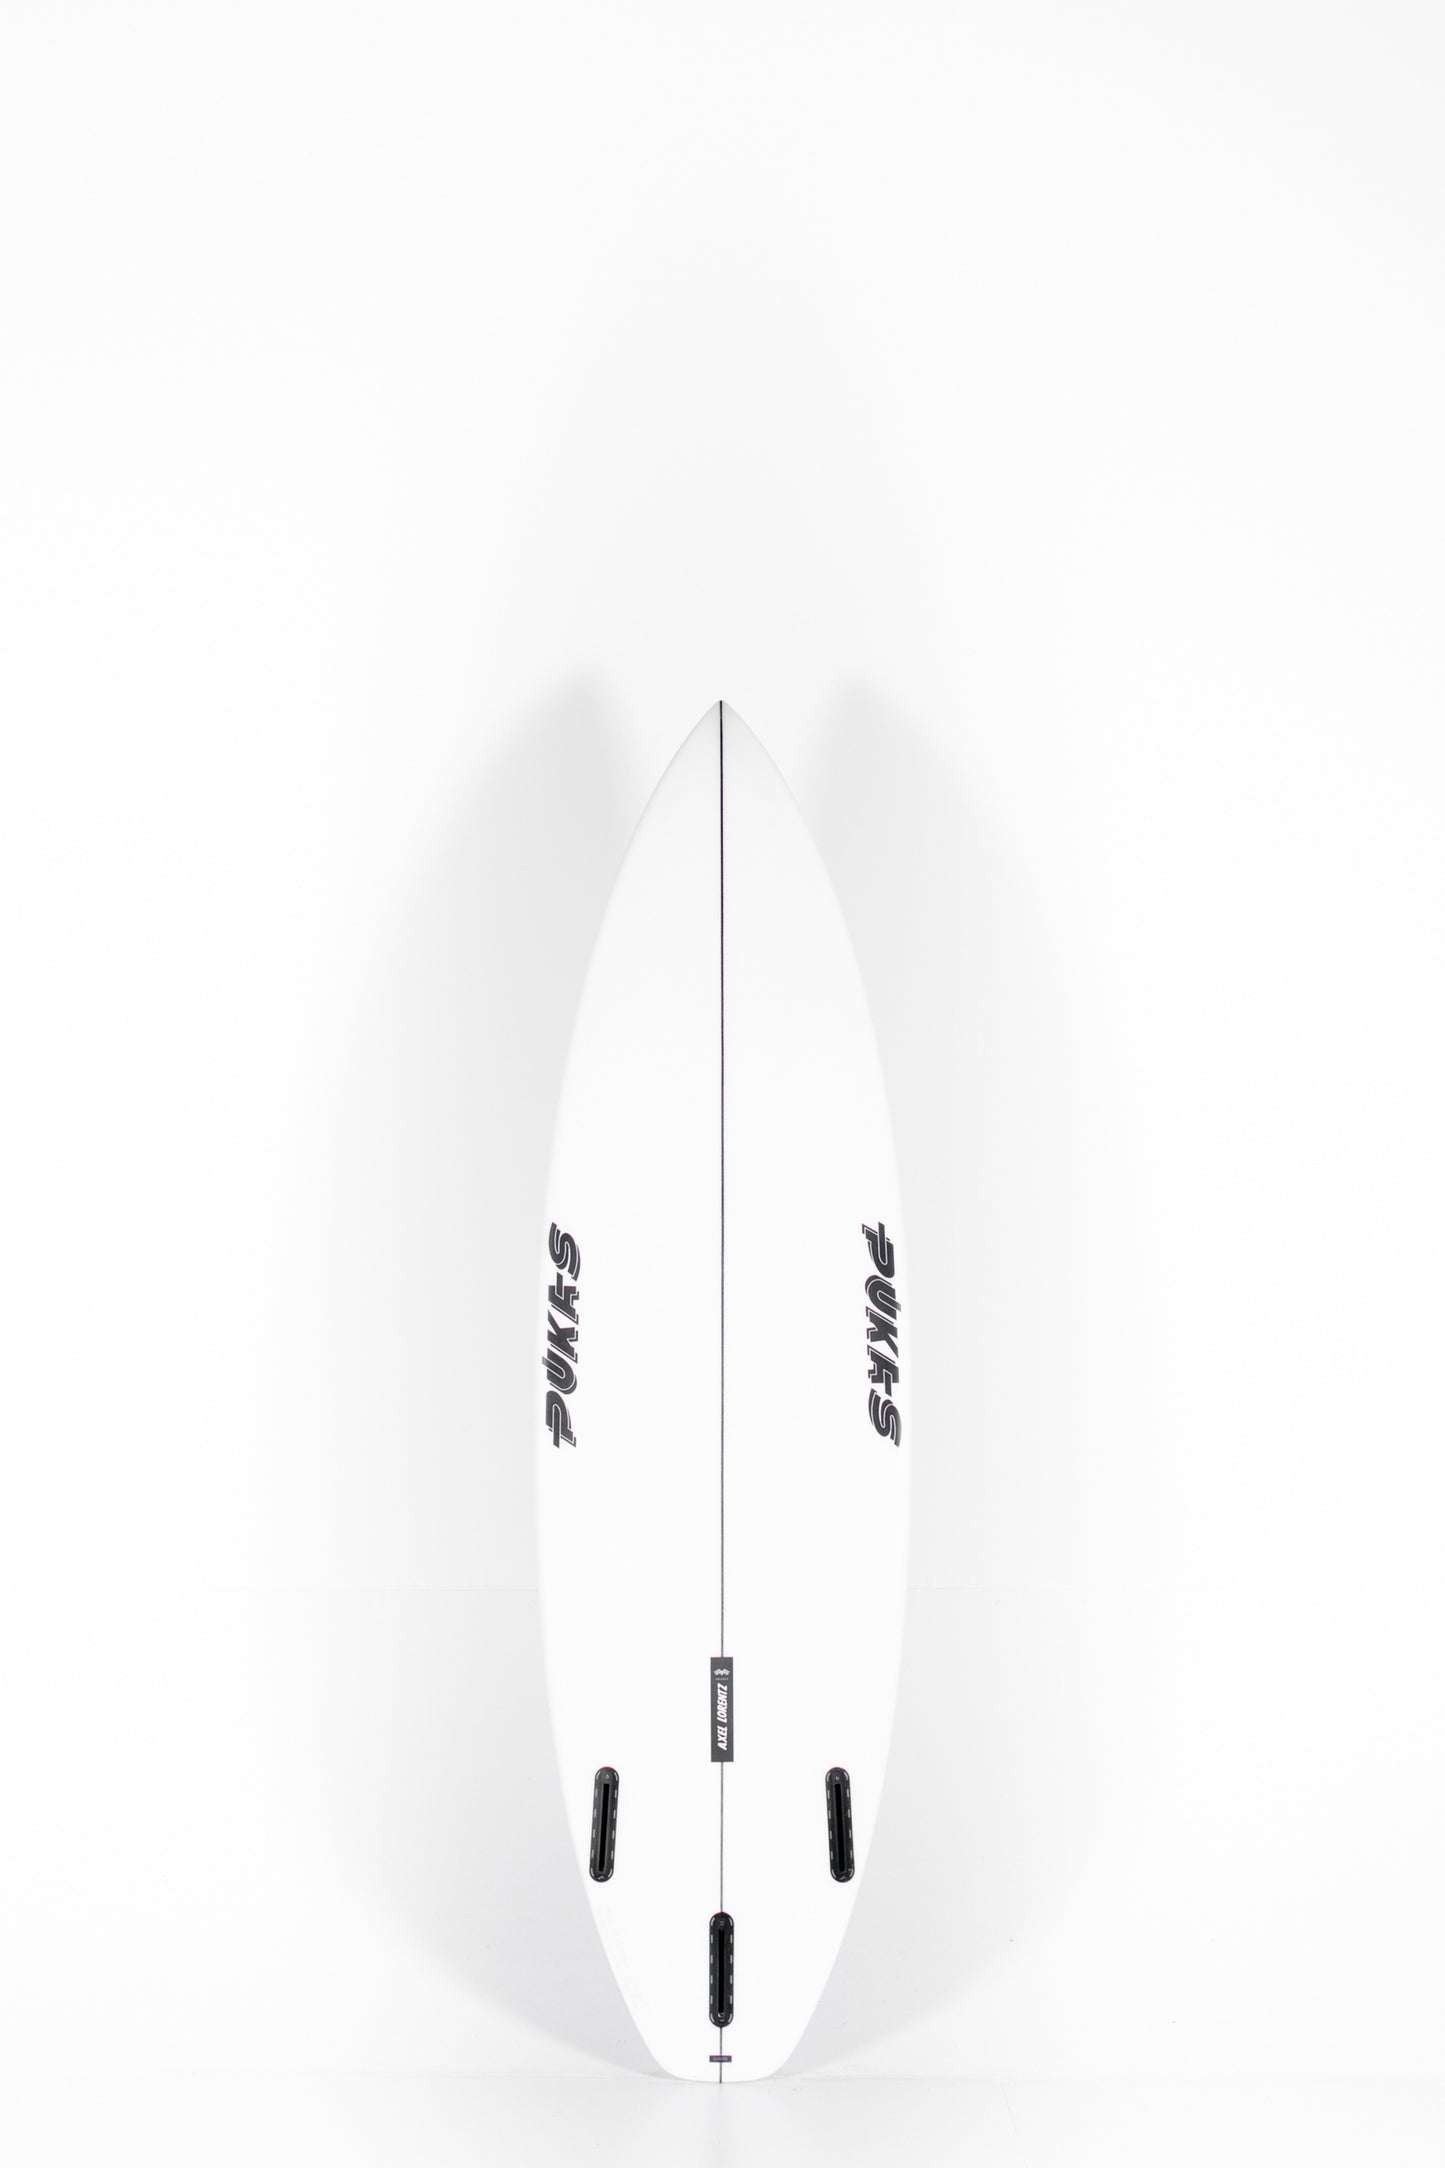 Pukas Surf Shop - Pukas Surfboard - DARKER by Axel Lorentz - 6'1" x 19,63 x 2,4 x 30,67L. - AX06228